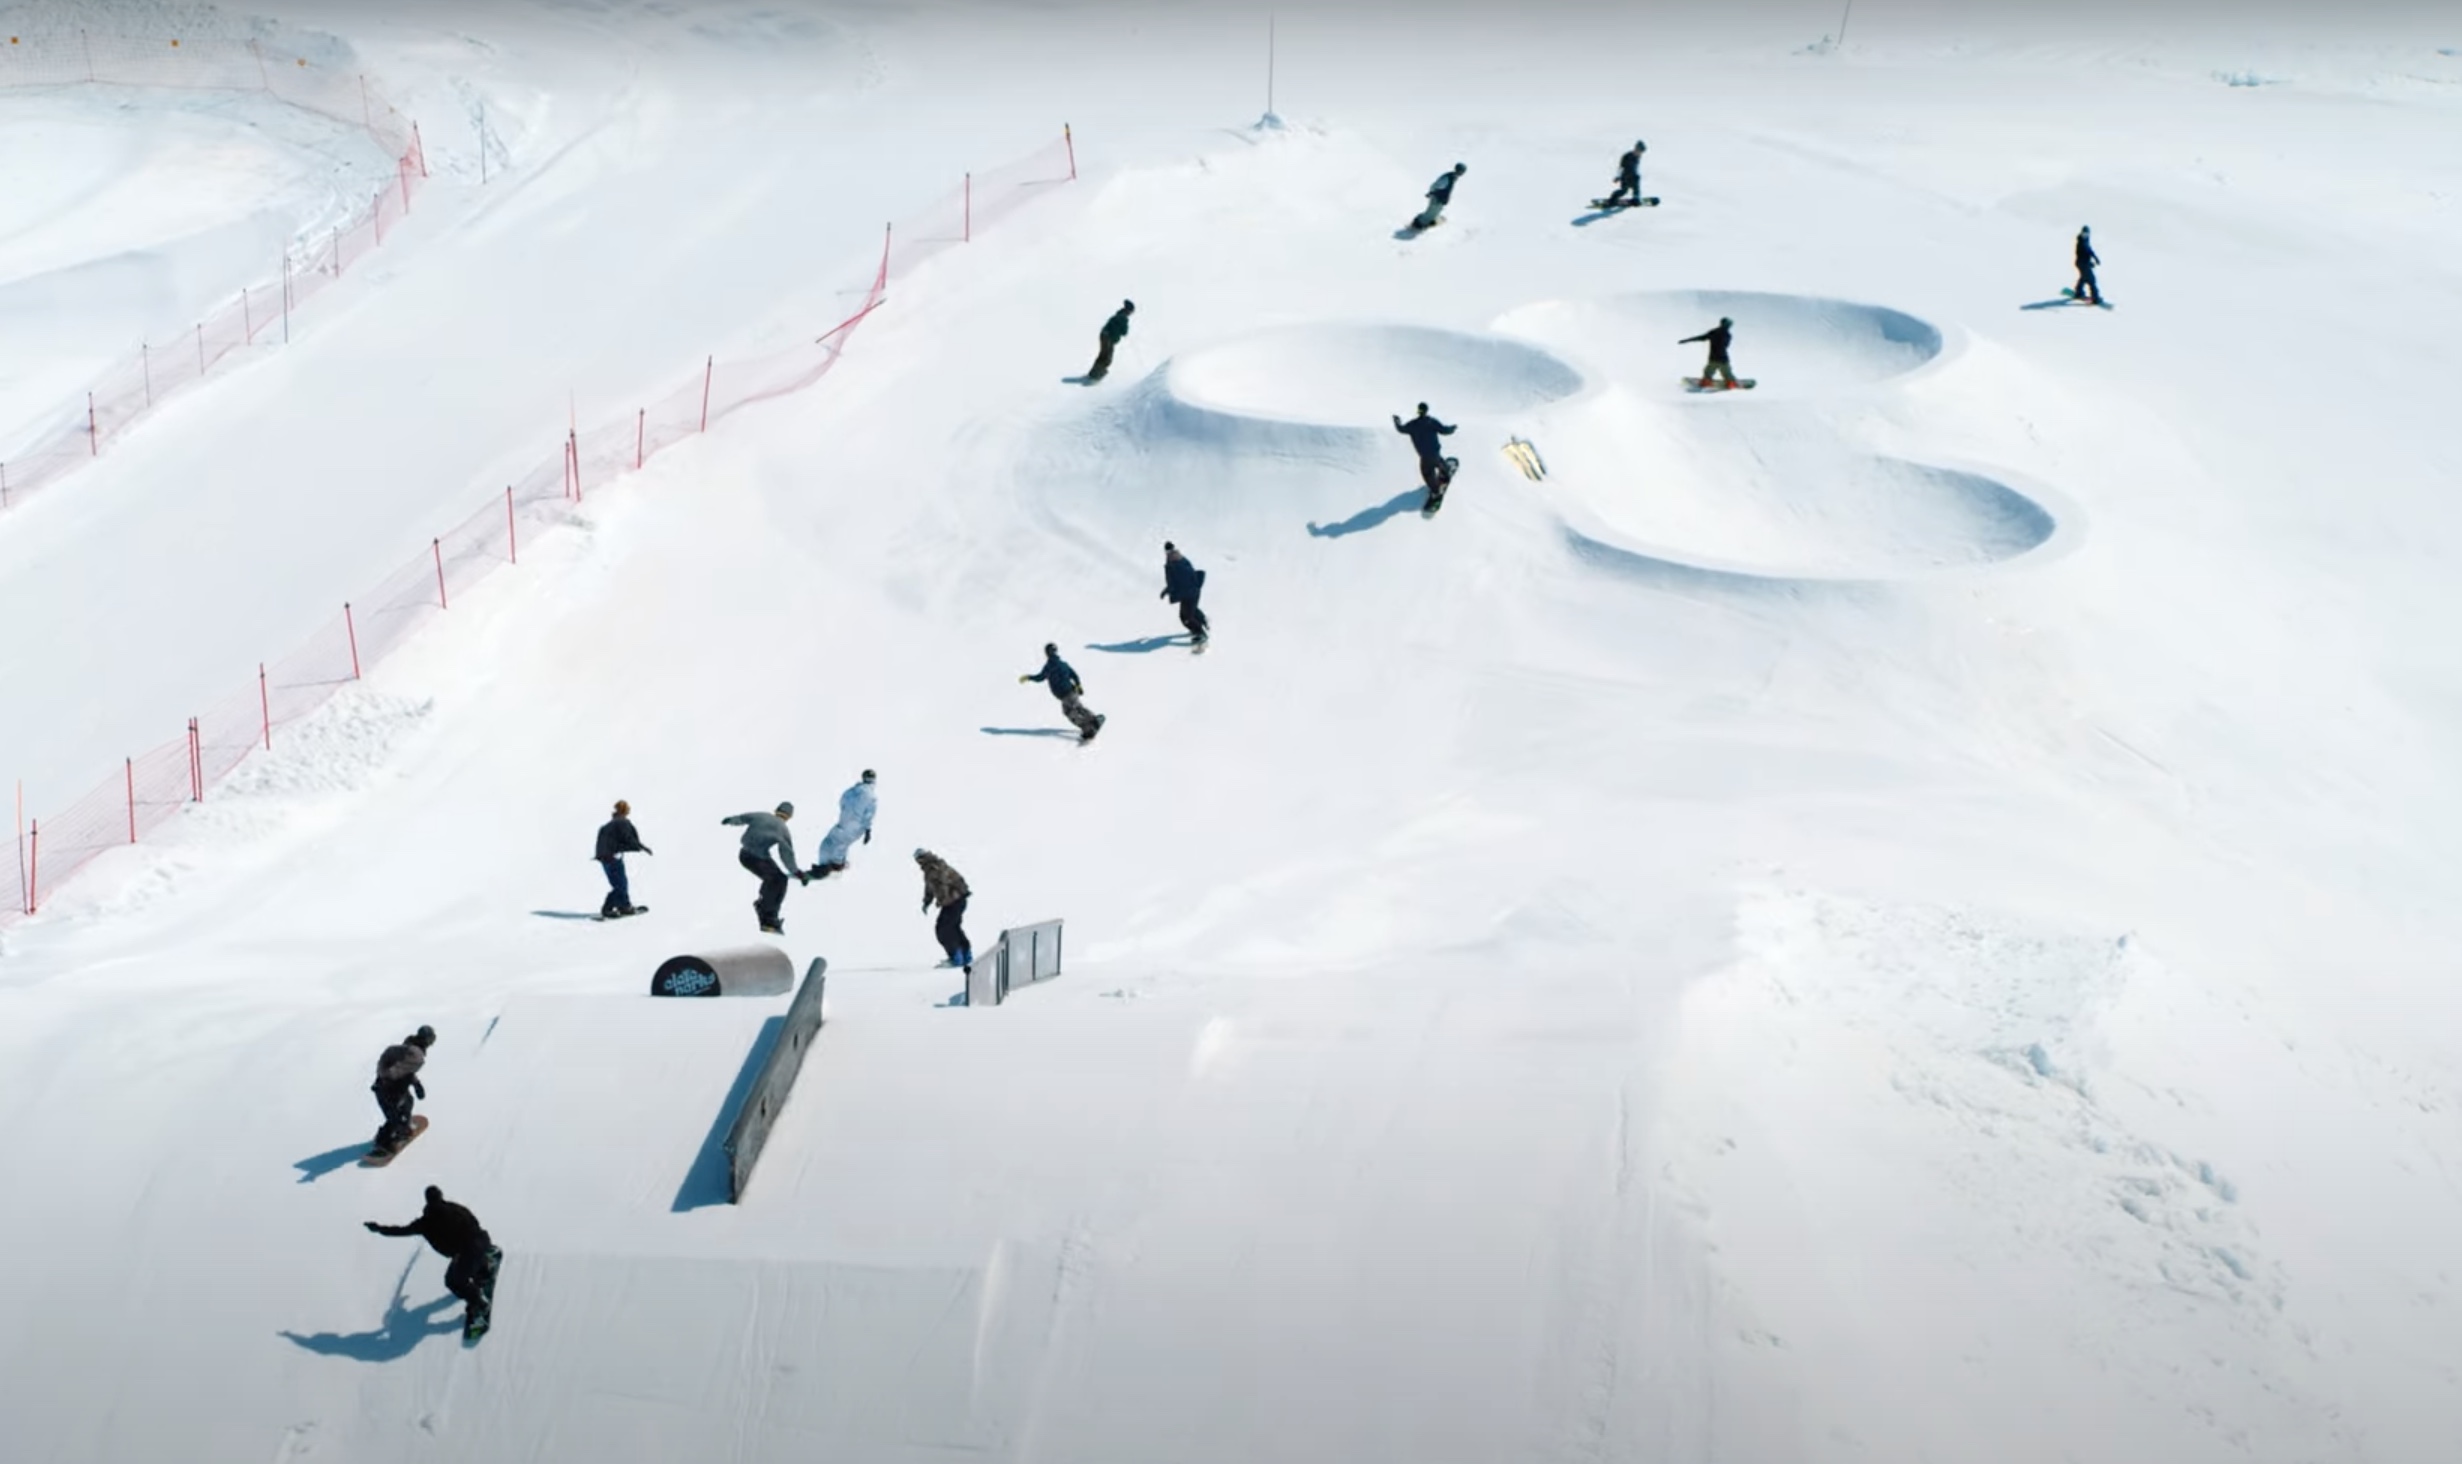 Monster Snowboard Team Assembles In Switzerland For Epic Week of Spring Shredding